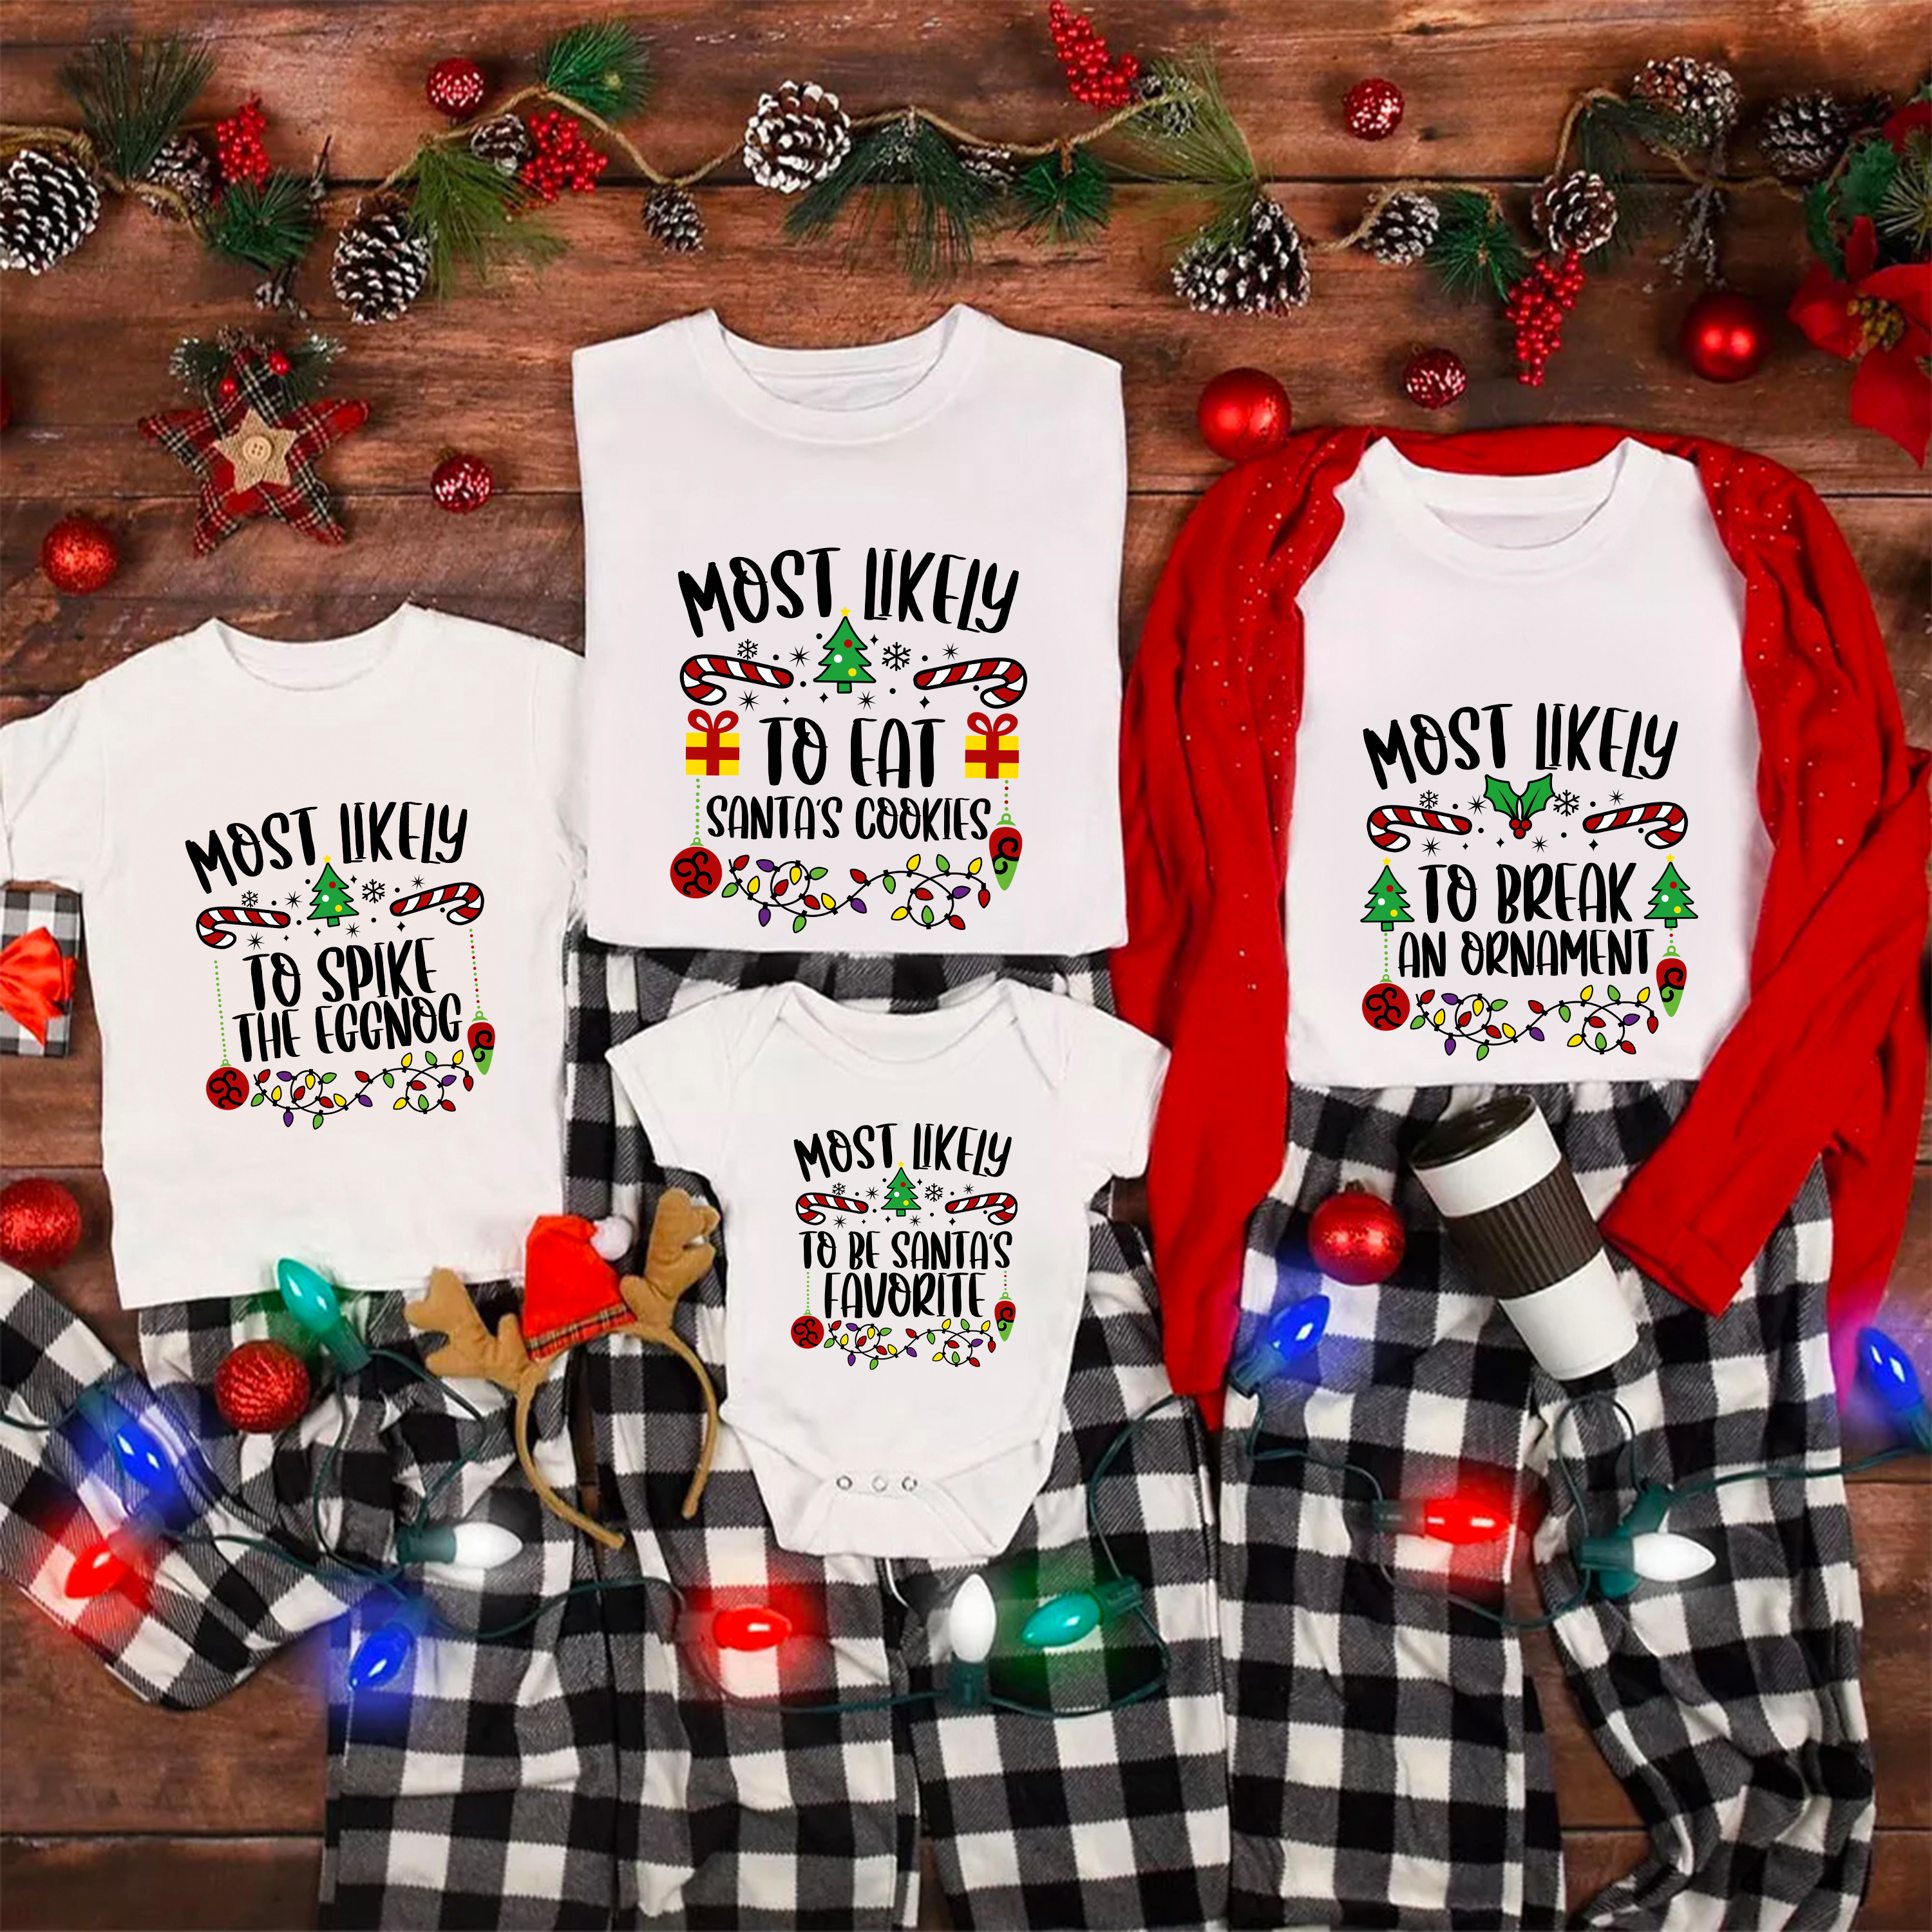 Christmas Day Sales, Family Christmas T-shirts & Clothing Deals –  Beepumpkin™